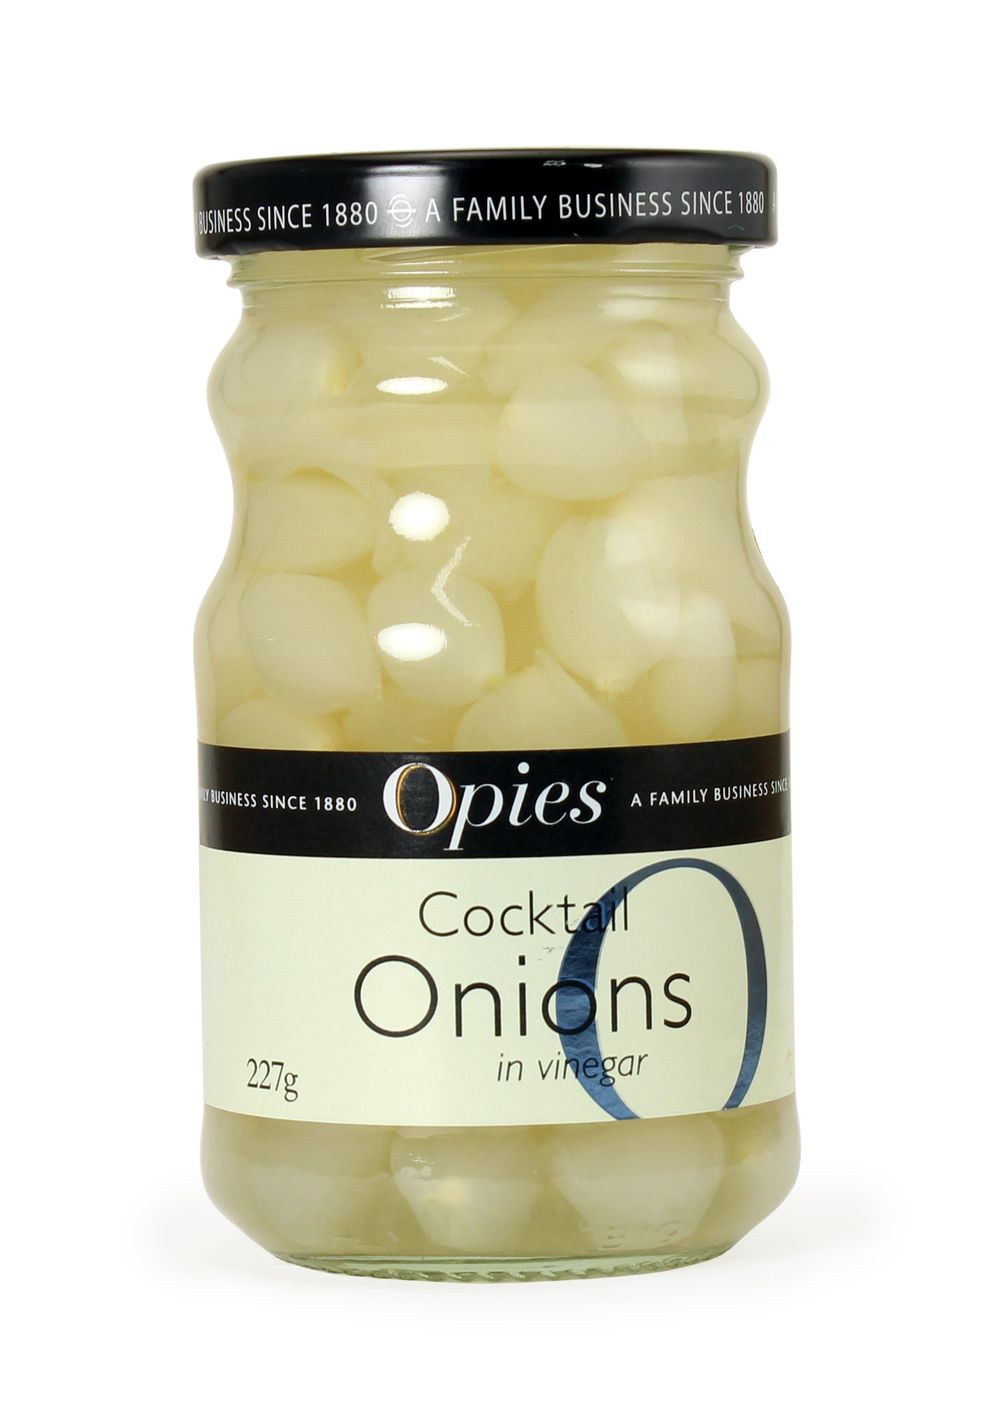 Cocktail Onions in Vinegar